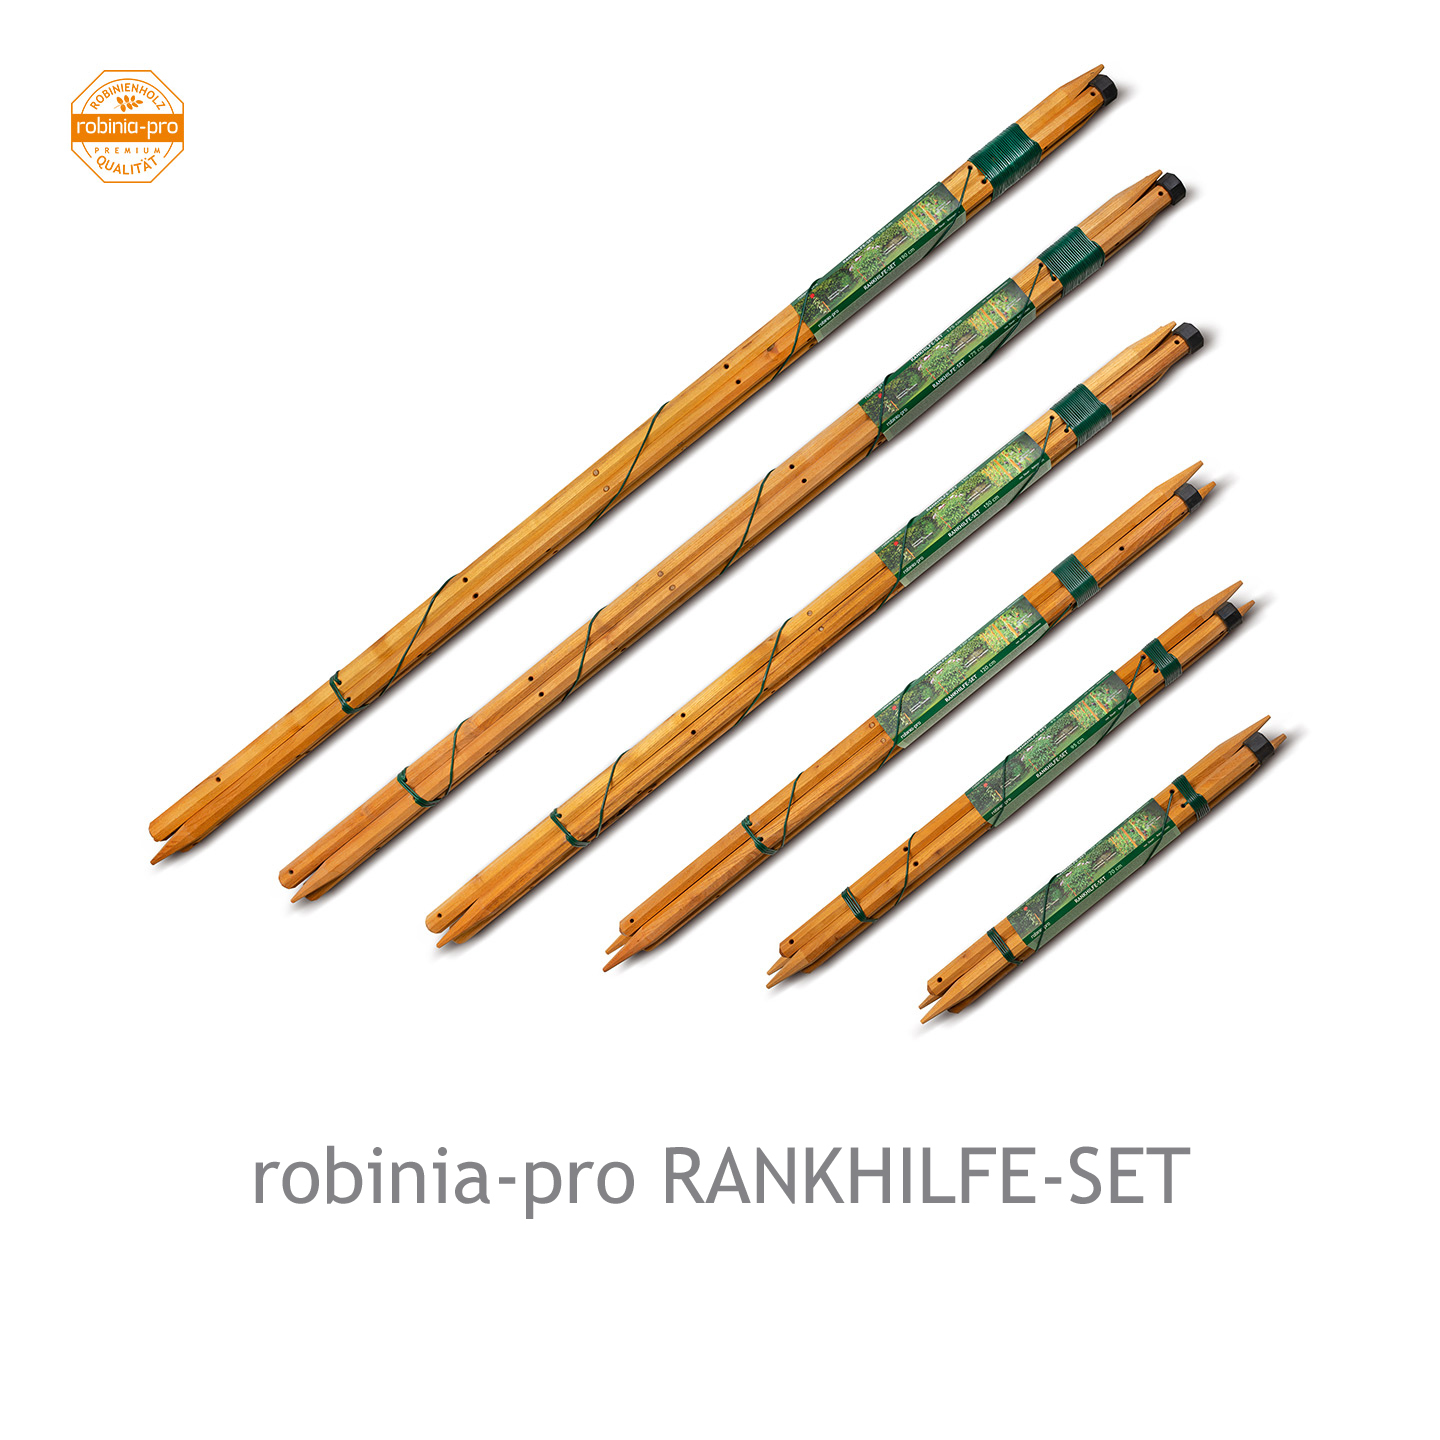 robinia-pro-RANKHILFE-SET